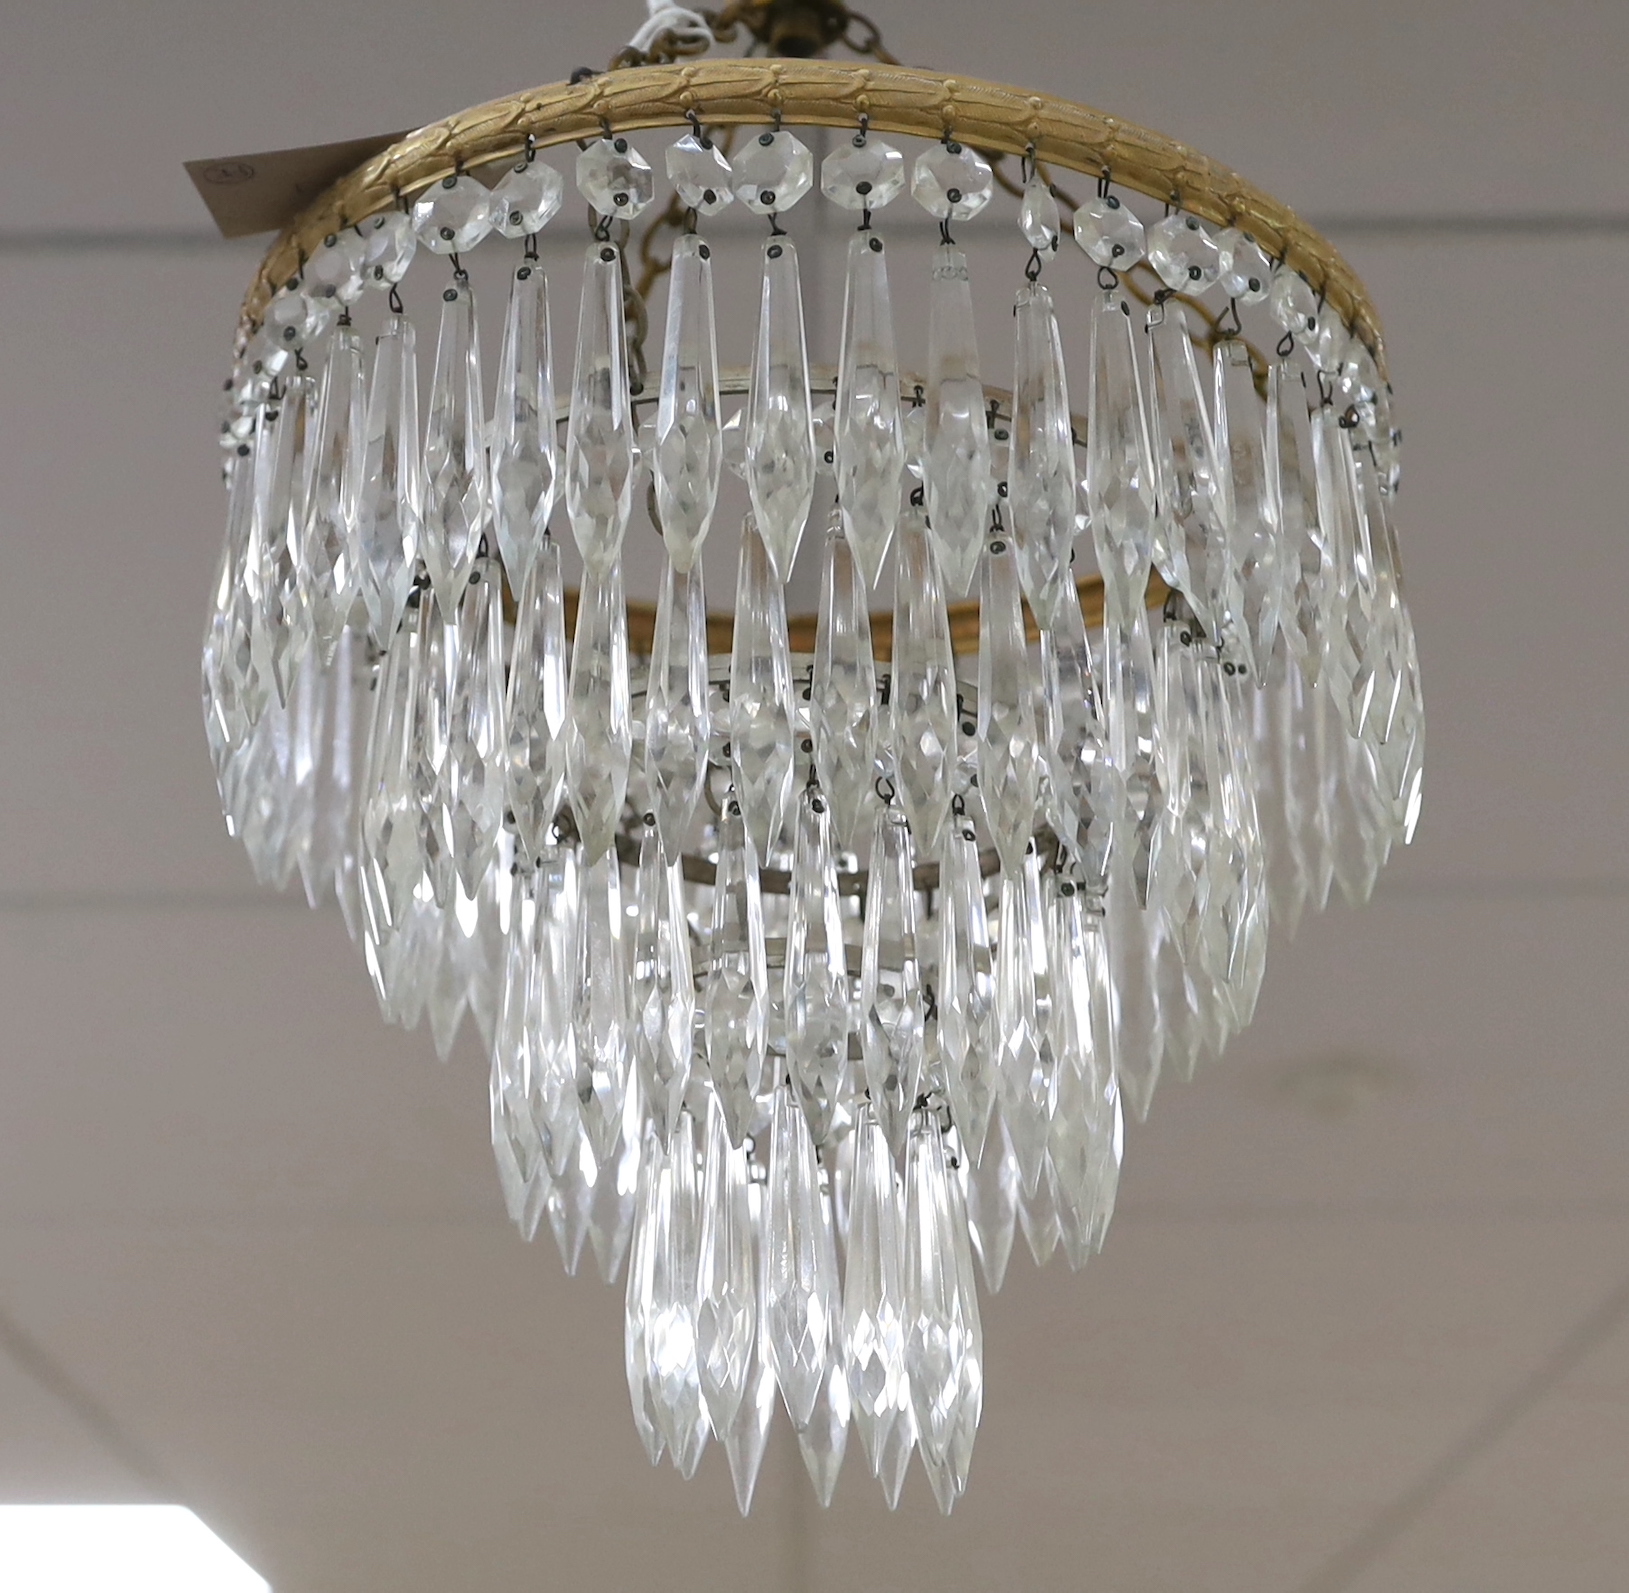 A pair of cut glass four tier chandeliers, 35cm long